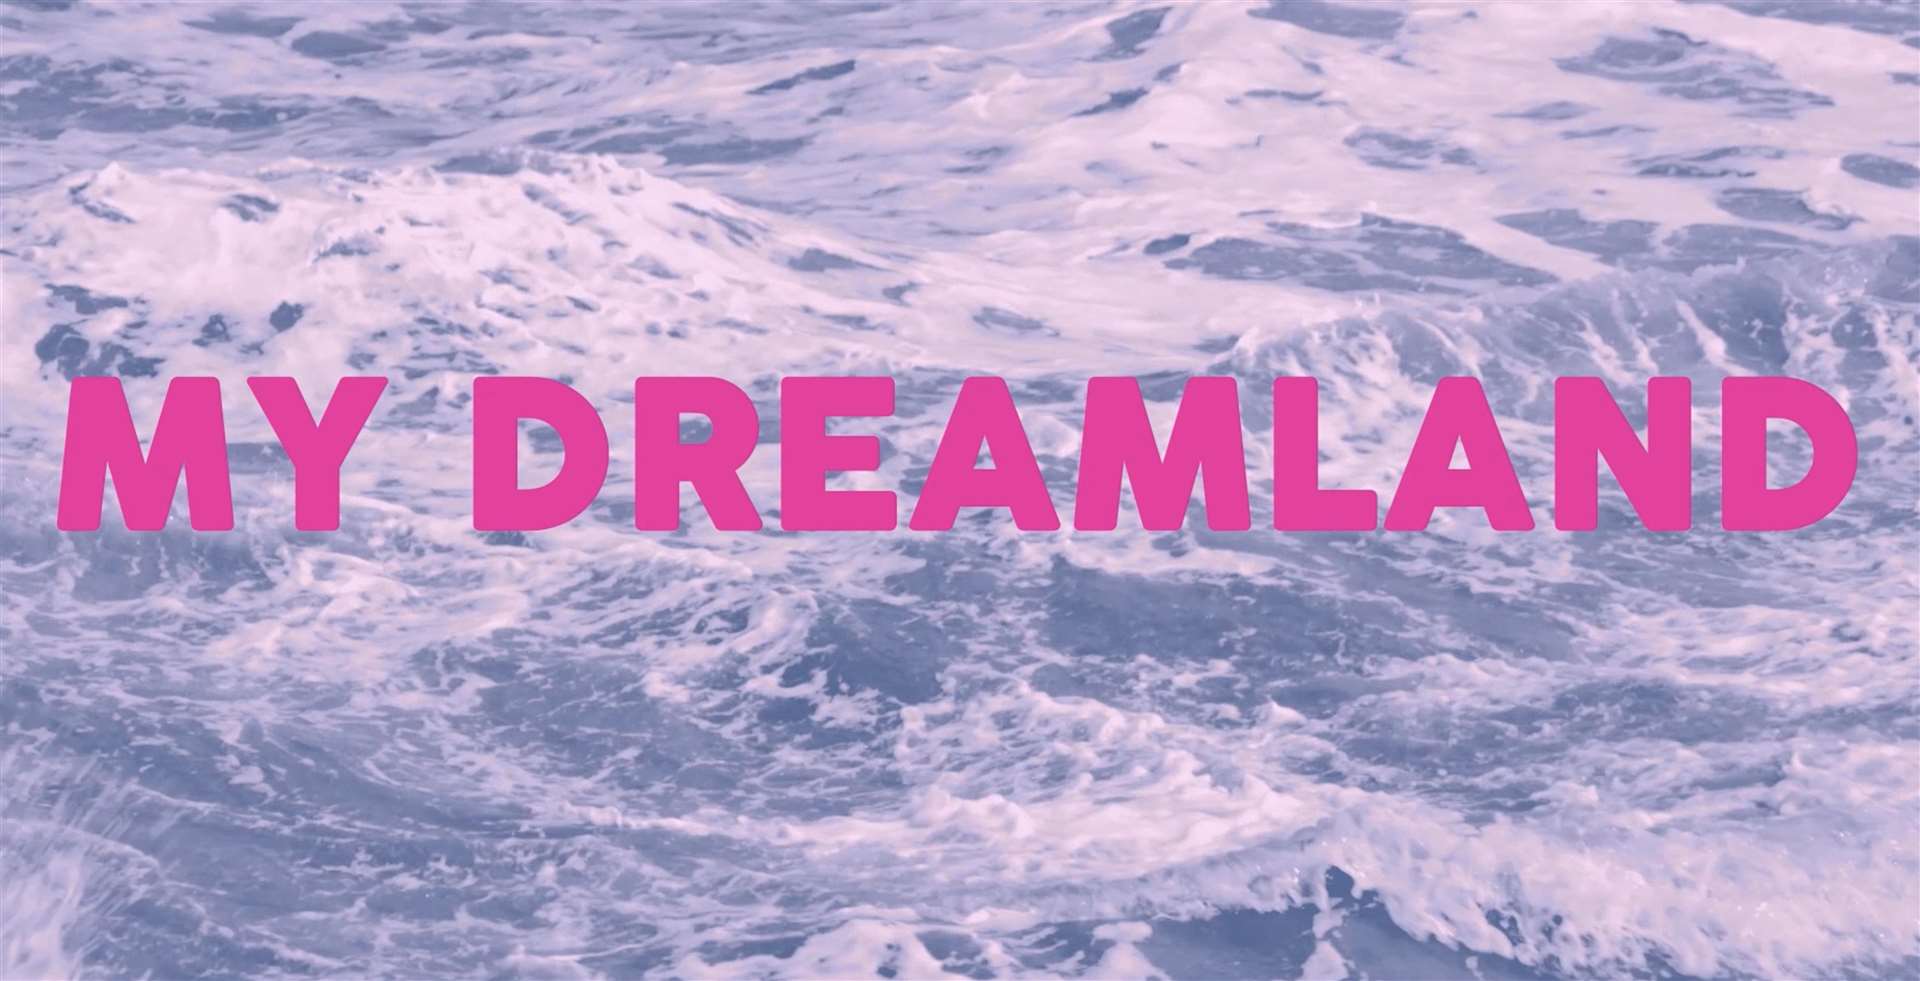 My Dreamland, a film by the Dreamland Trust